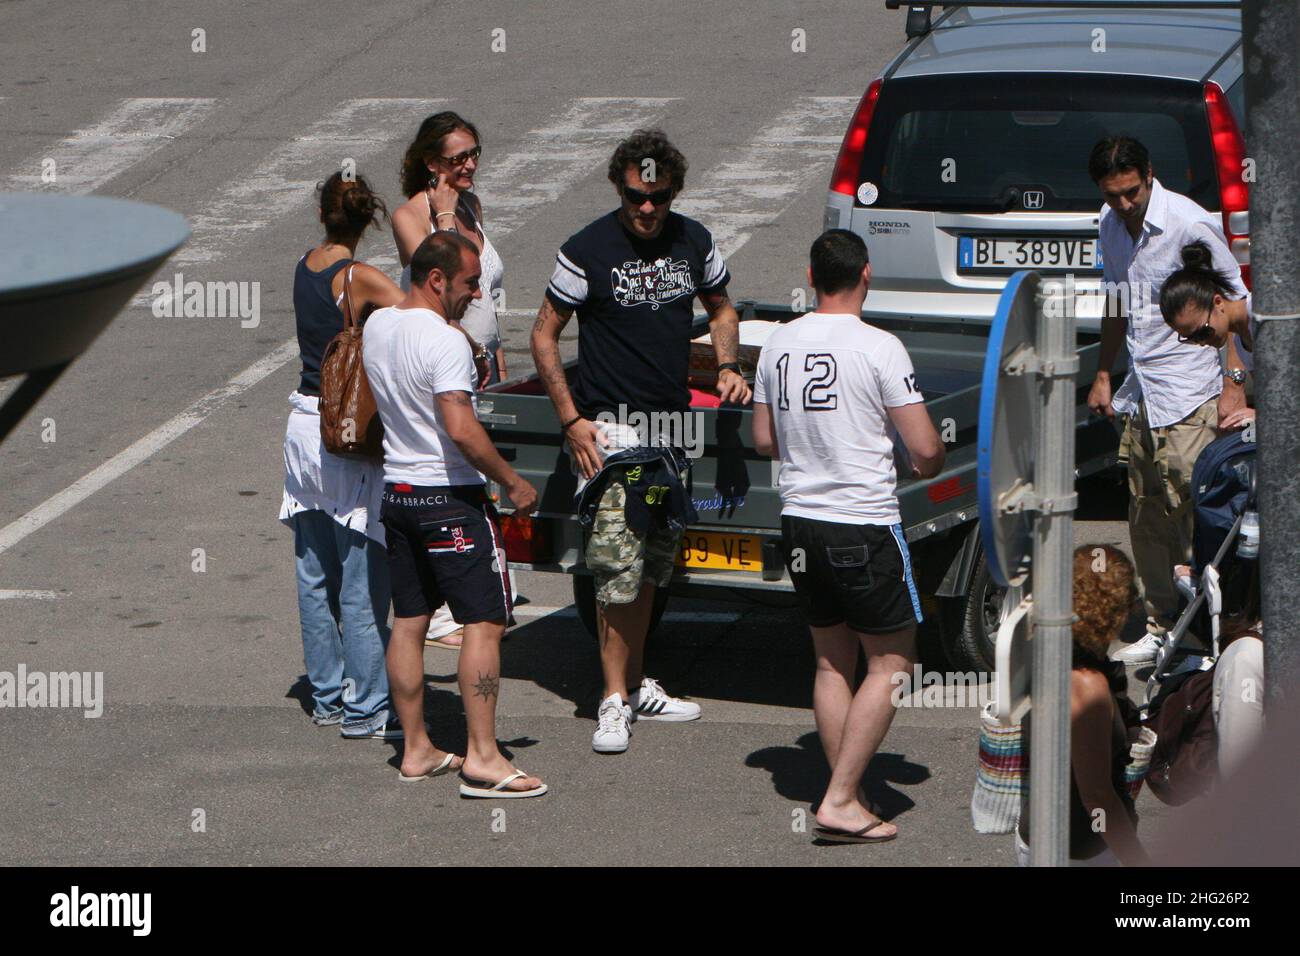 Soccer player Christian Vieri arriving in Formentera with girlfriend Melissa Satta and friend Bombardini with wife Giorgia Palmas, Baleari Islands, Spain.  Stock Photo